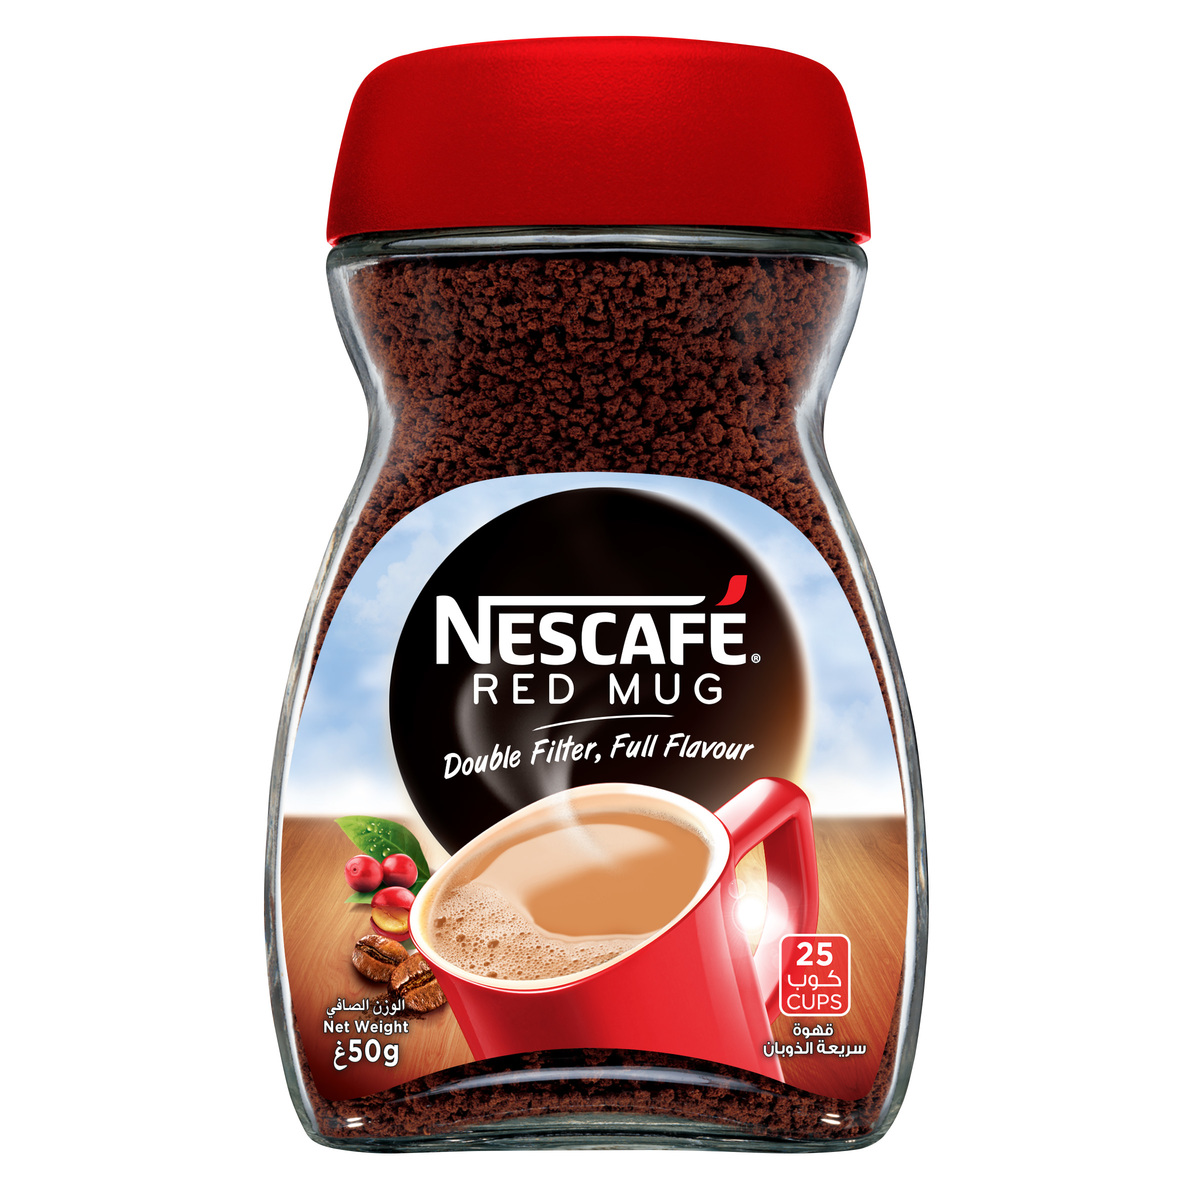 NESCAFE INSTANT RED MUG COFFEE SMALL